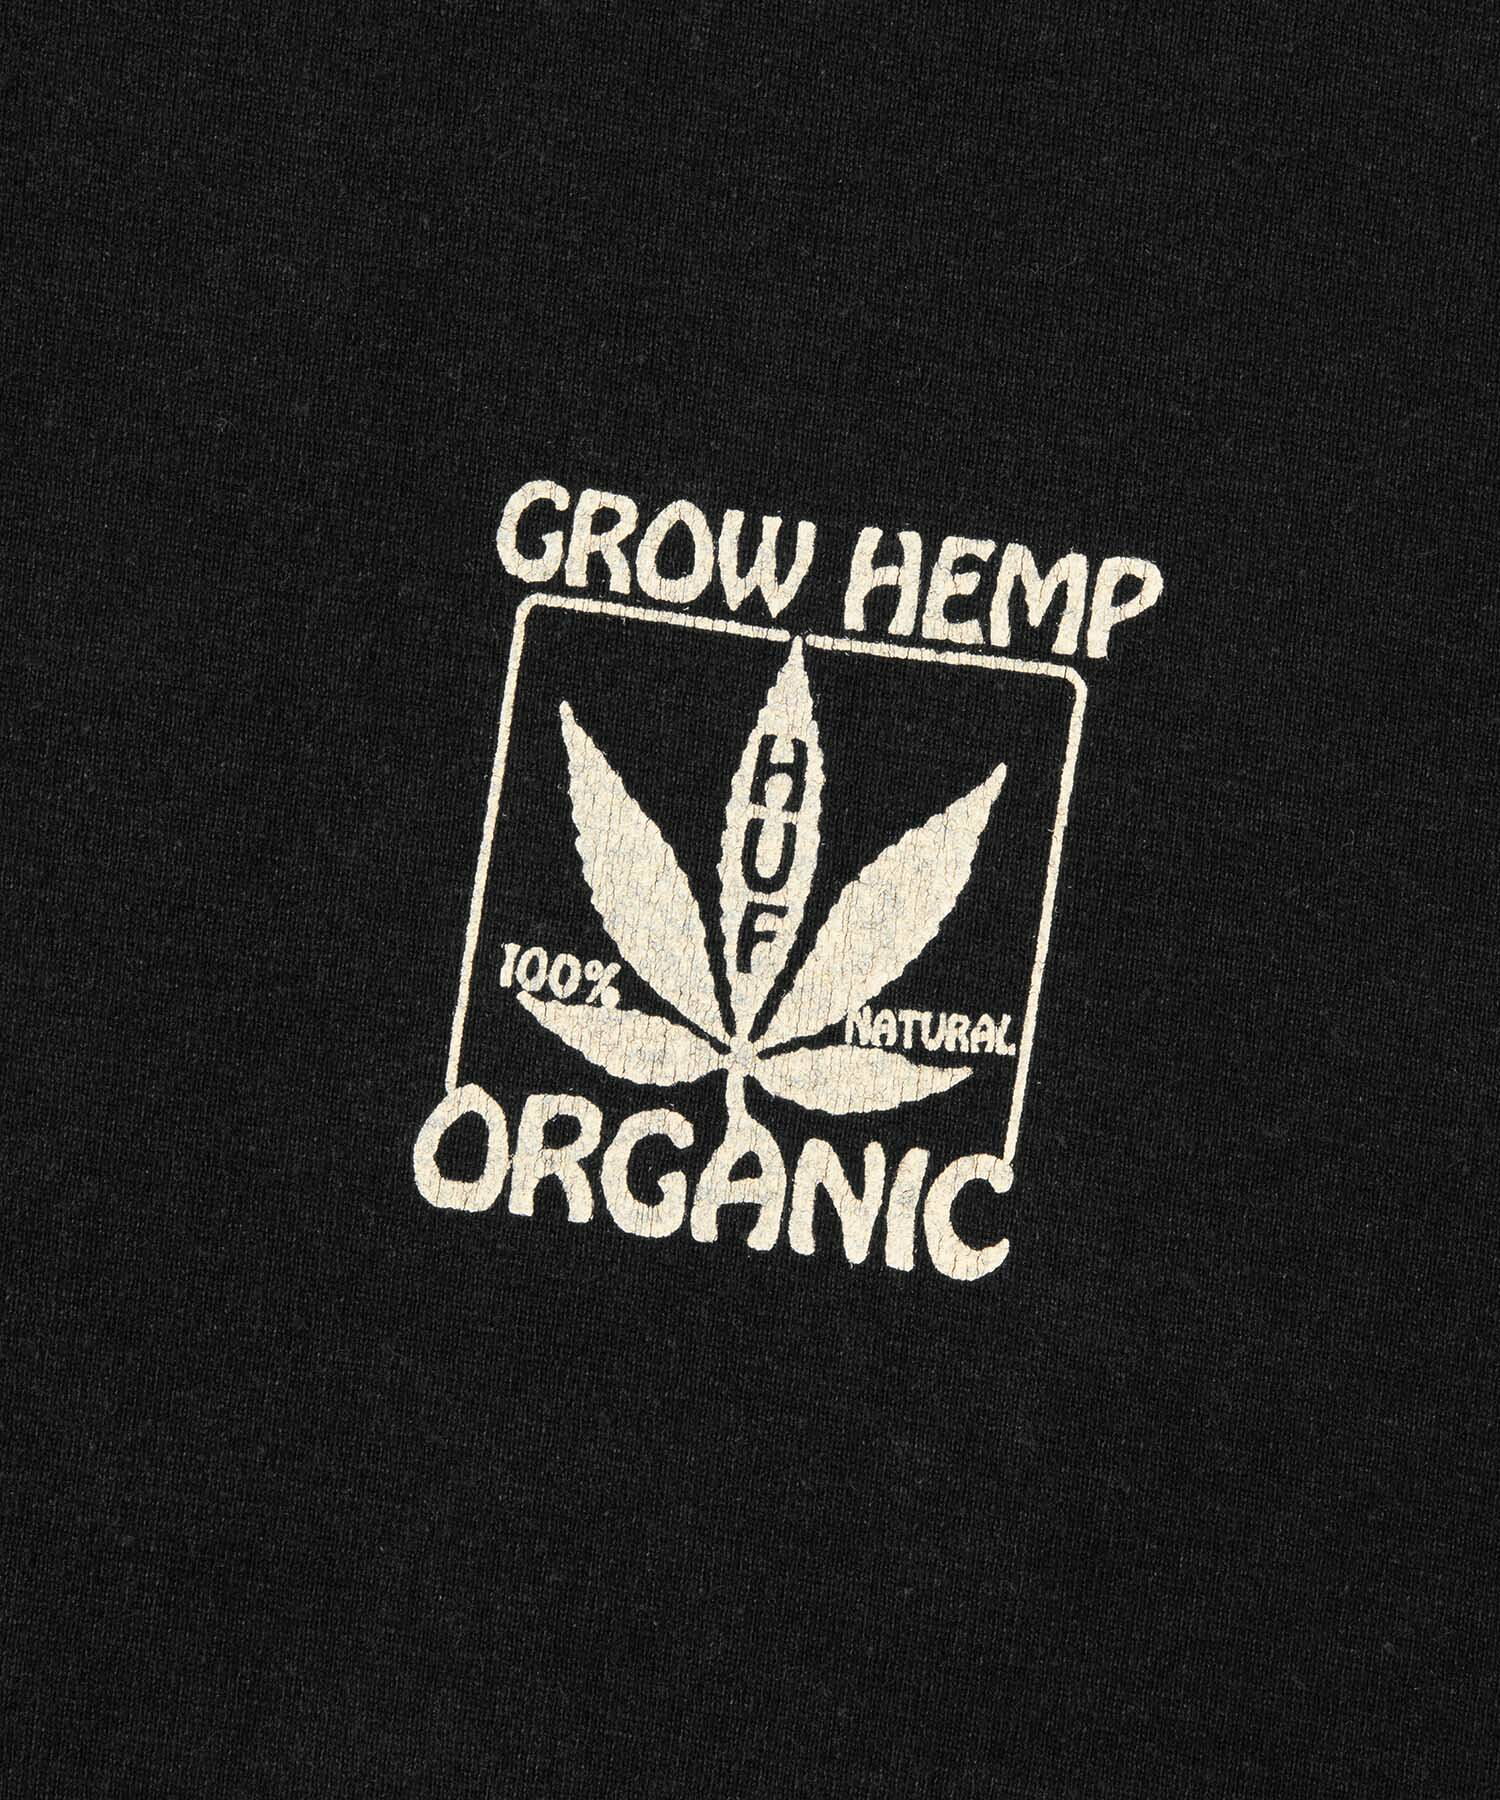 ORGANIC GROW HEMP S/S TEE HUF ハフ Tシャツ